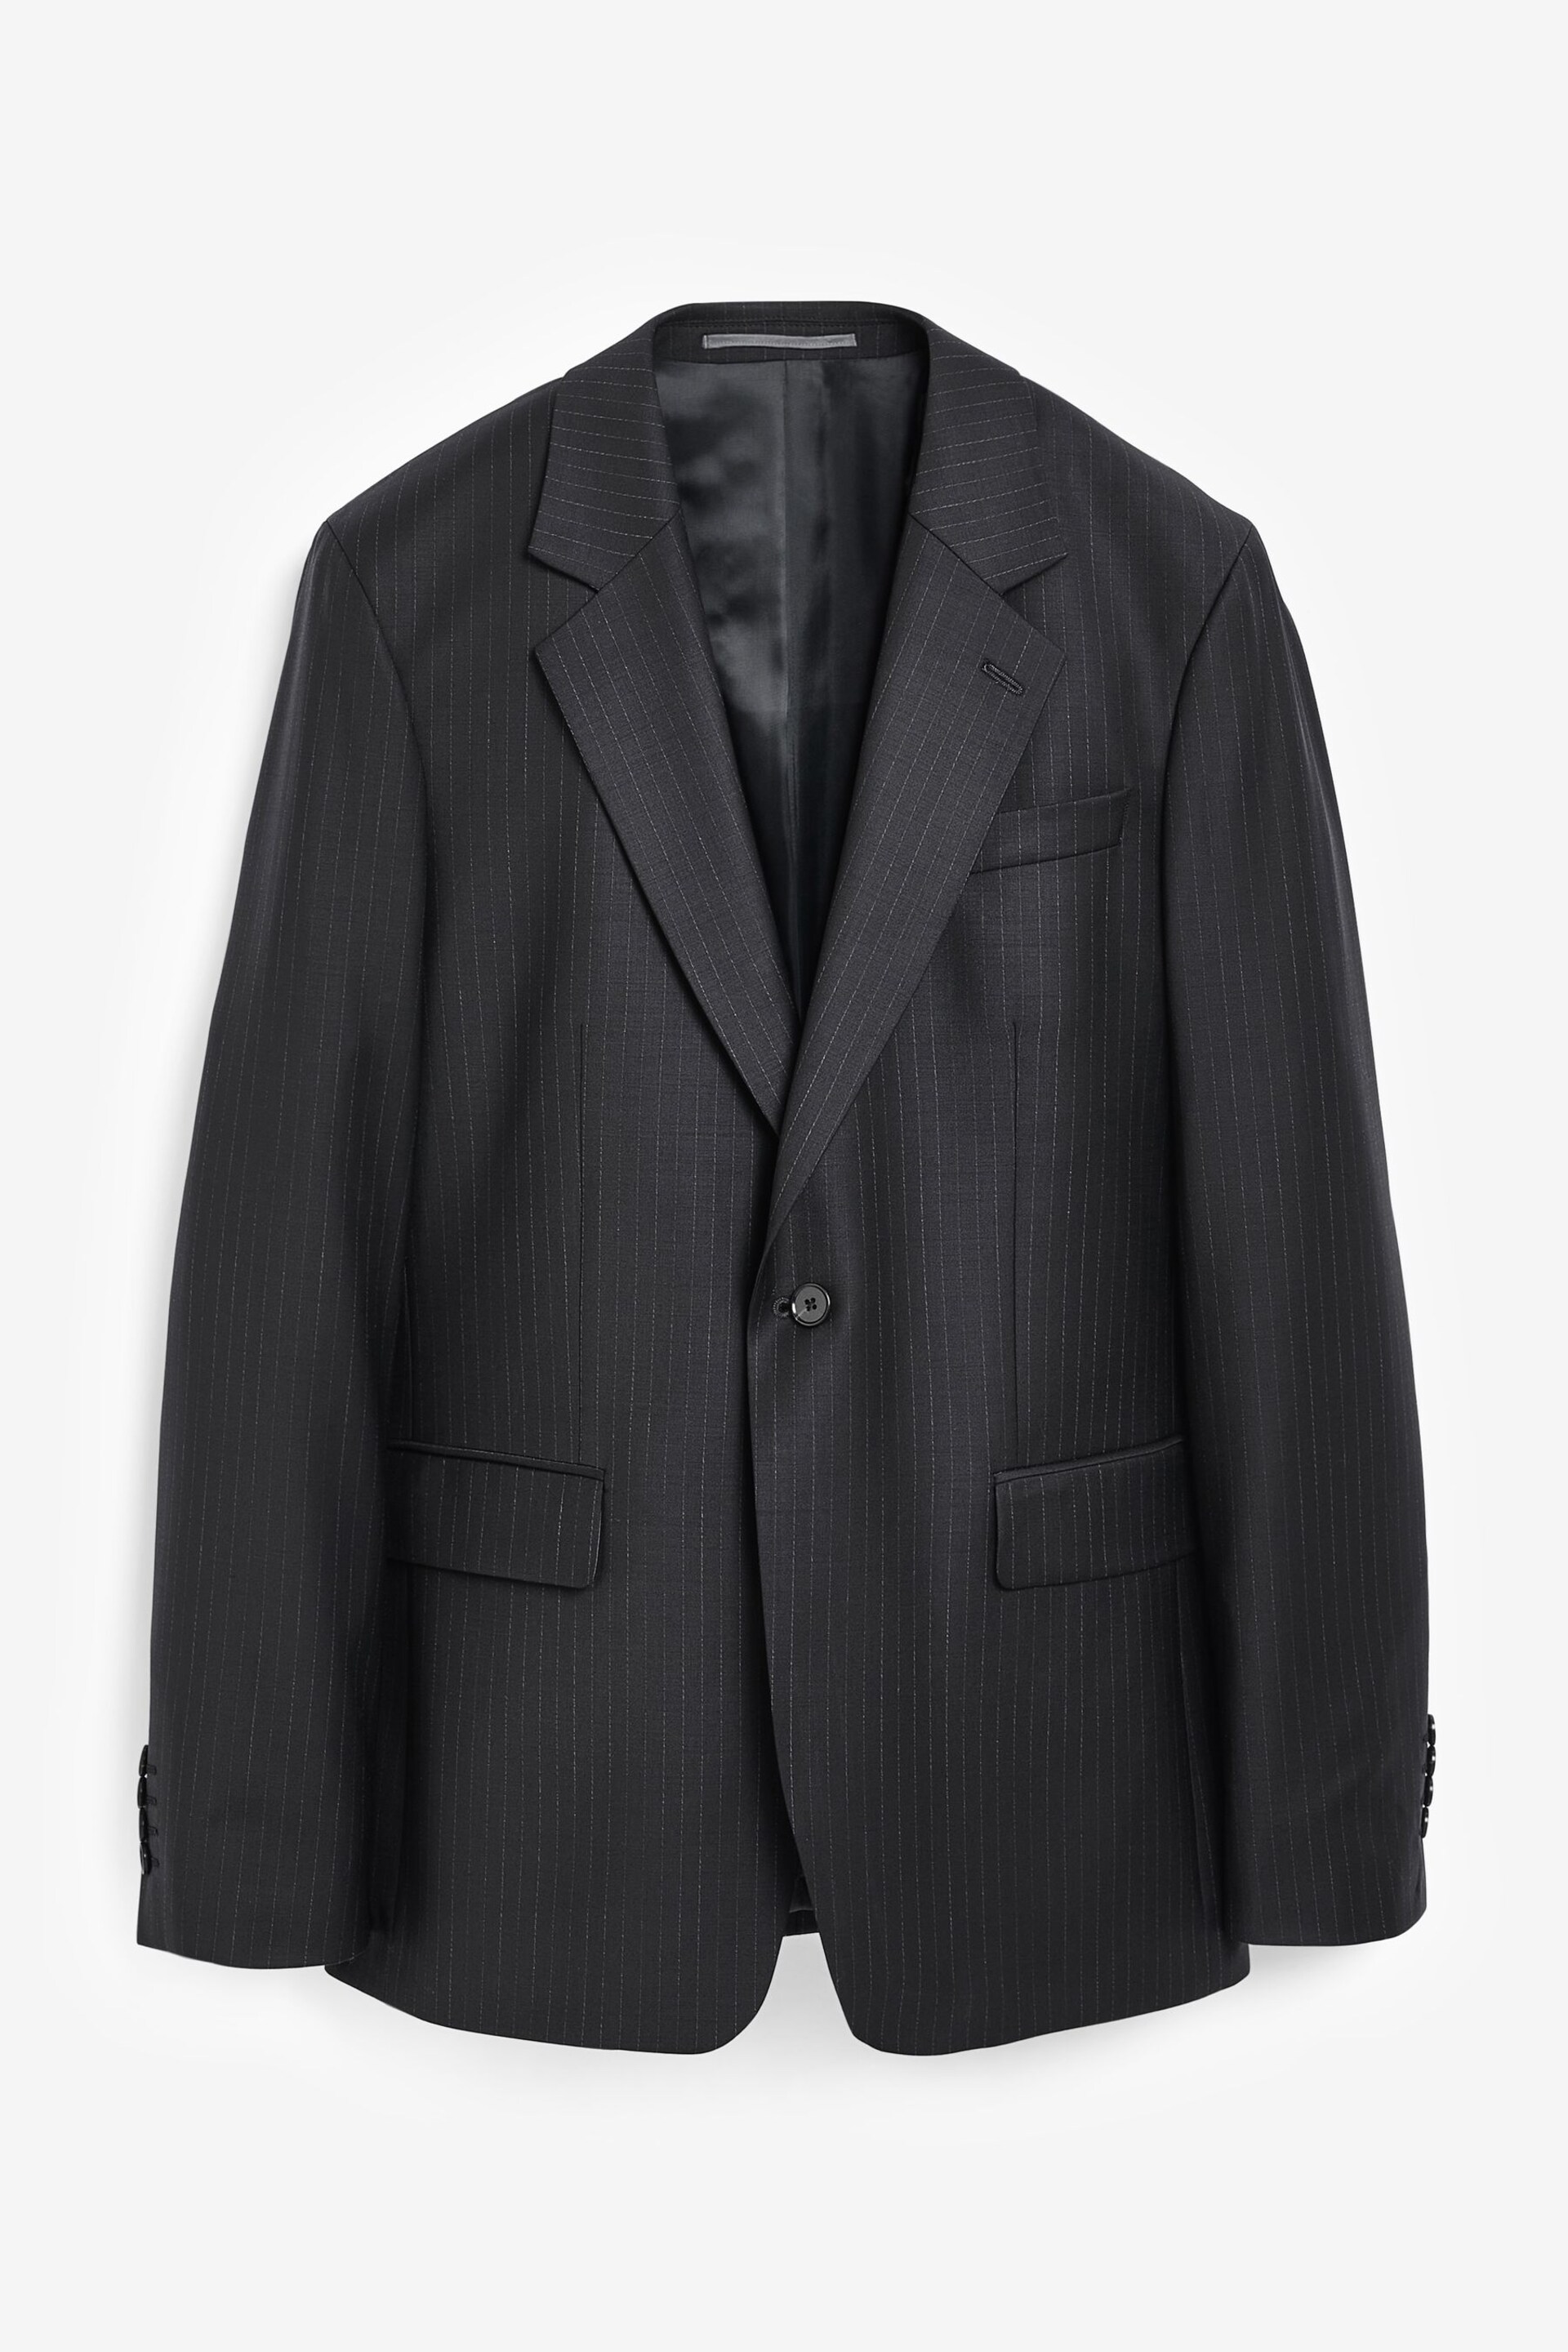 Black Stripe Suit: Jacket - Image 6 of 10